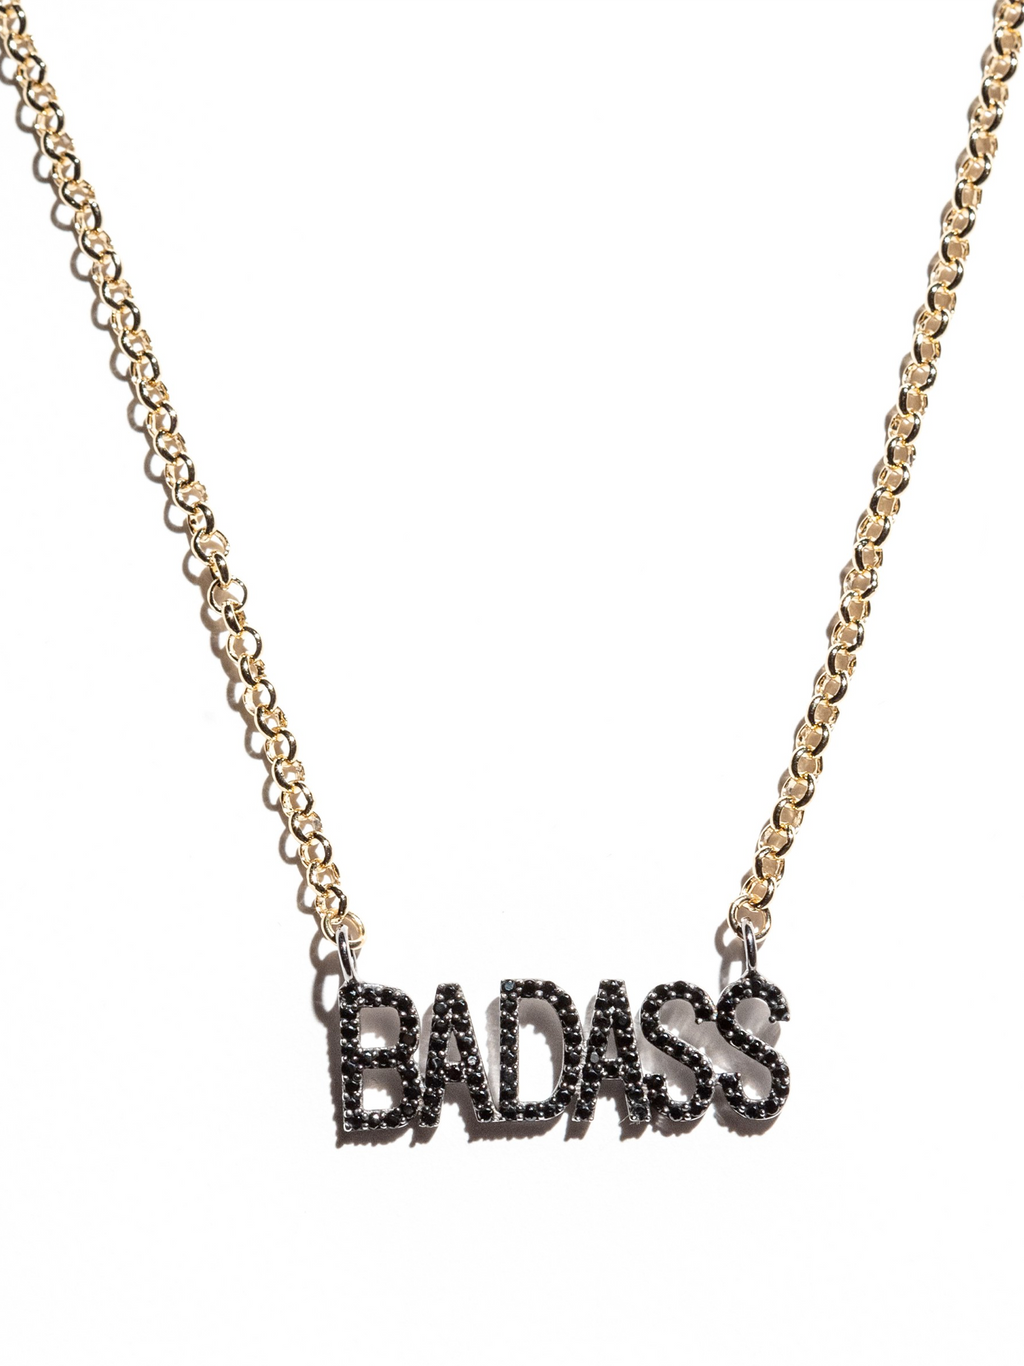 The Badass Necklace